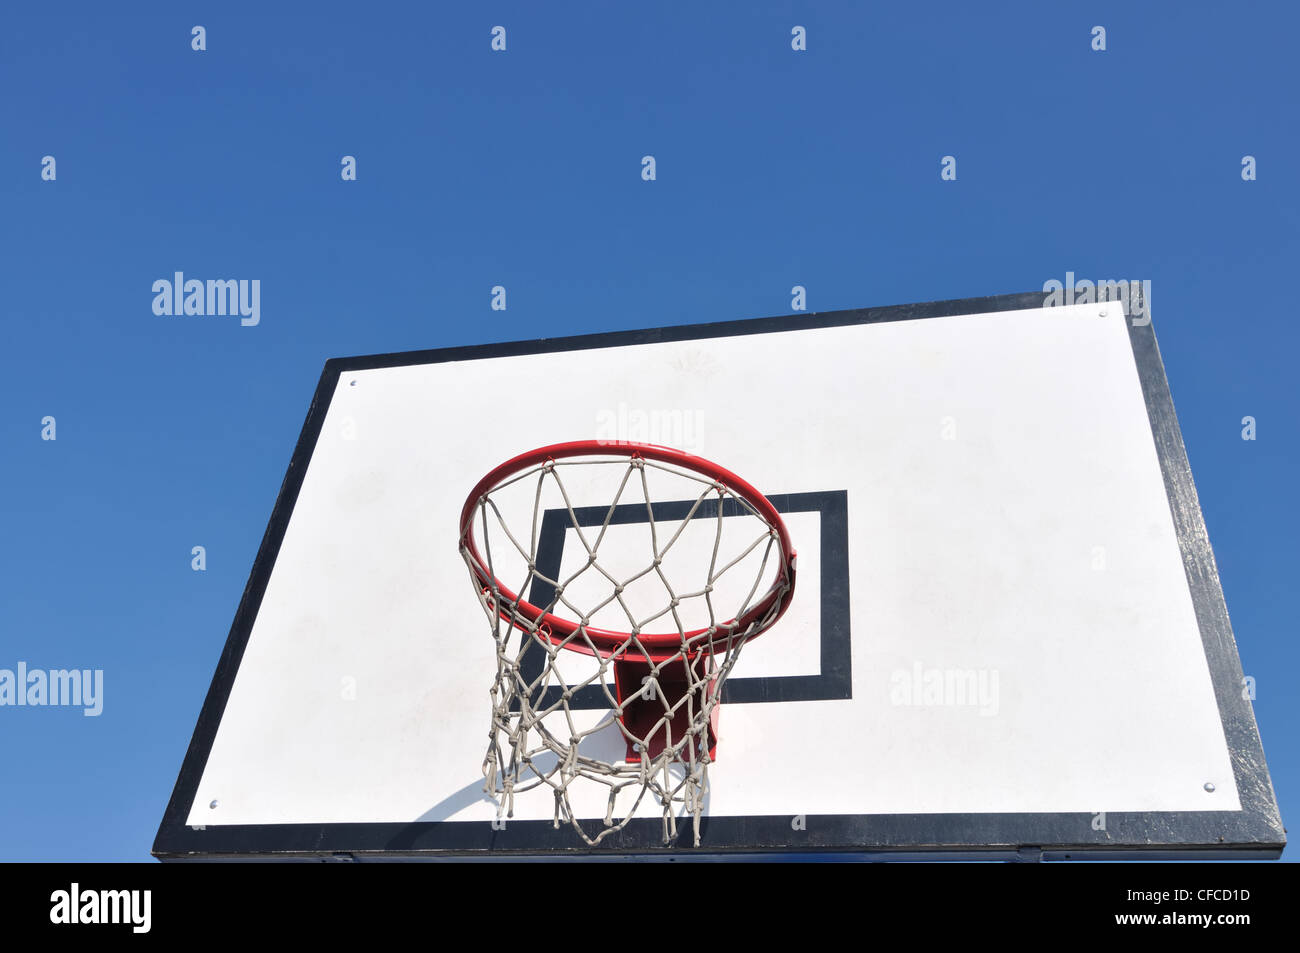 Outdoor basketball table over a blue sky Stock Photo